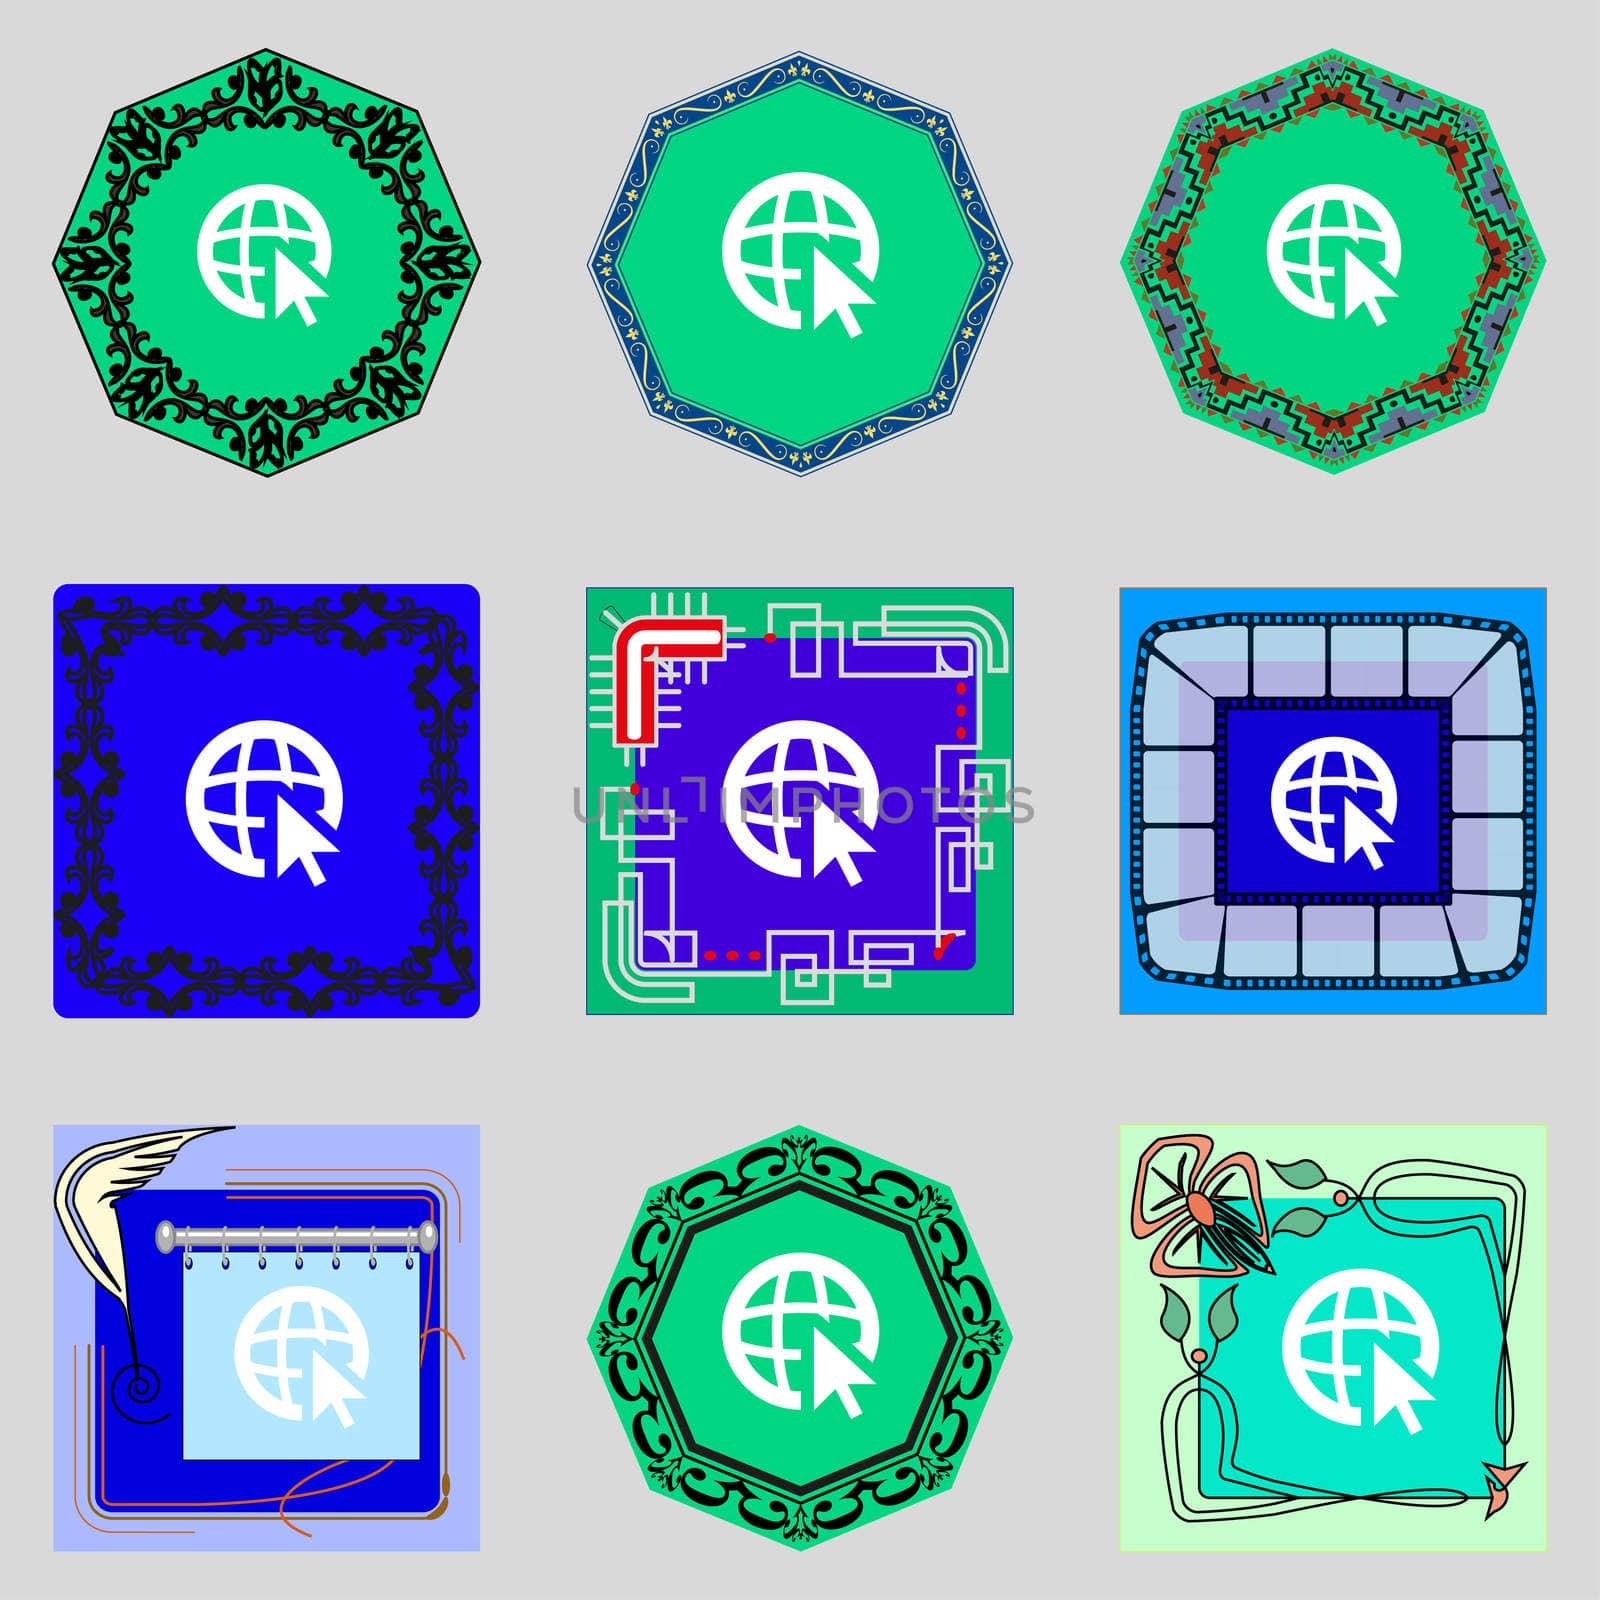 Internet sign icon. World wide web symbol. Cursor pointer. Set colourful buttons illustration